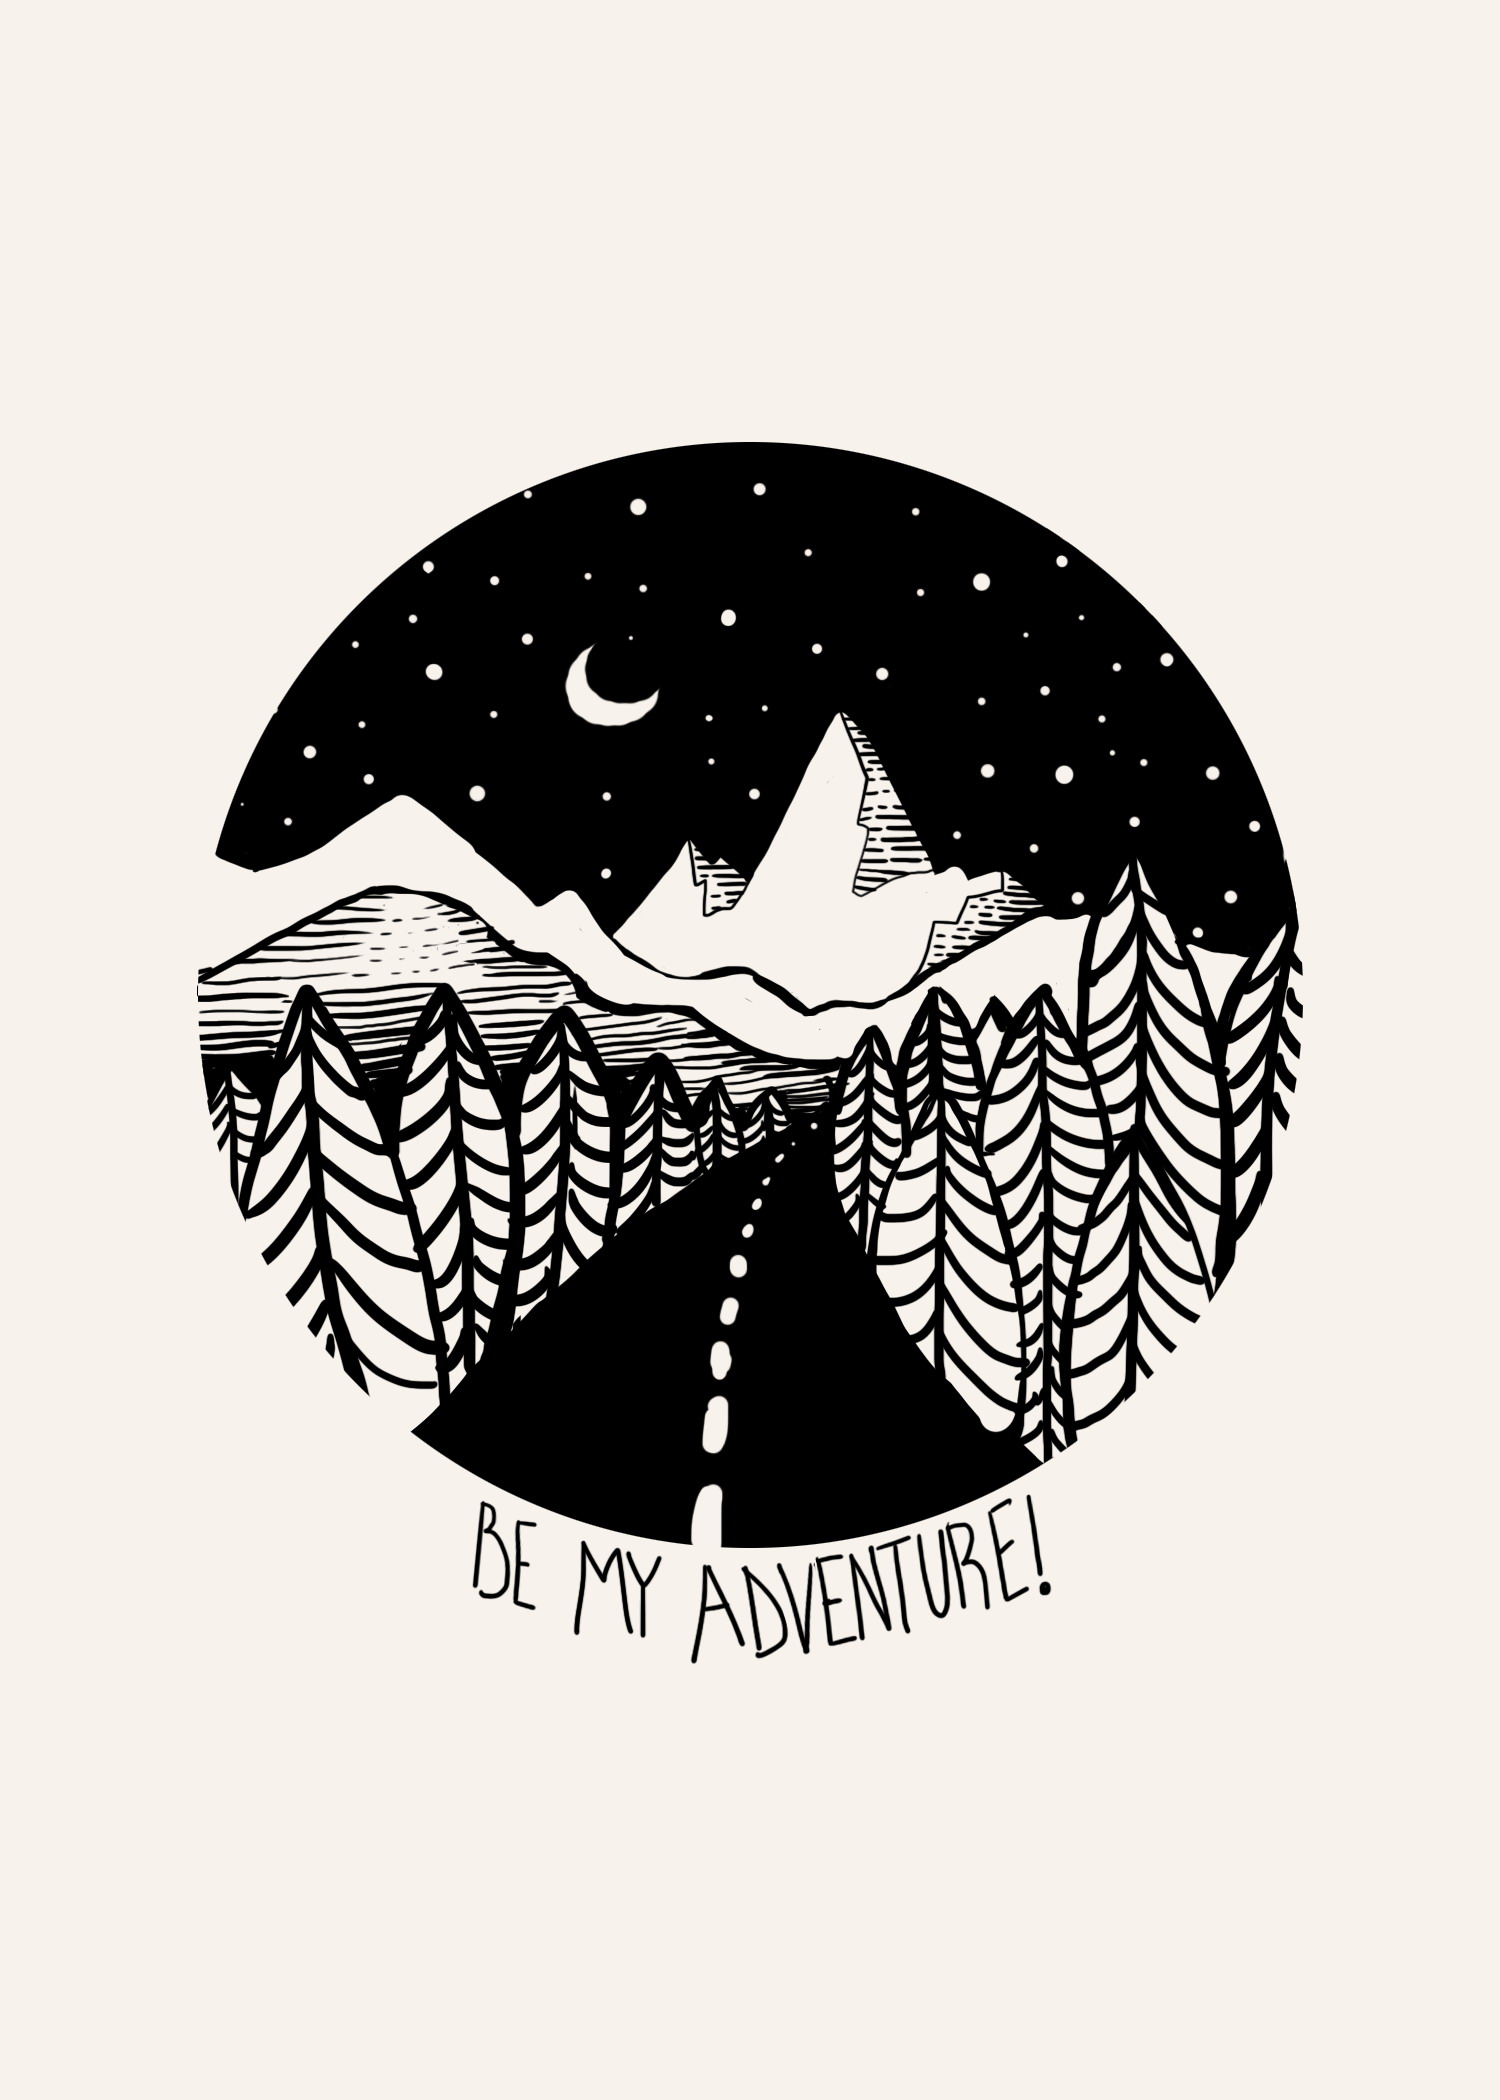 Be My Adventure!